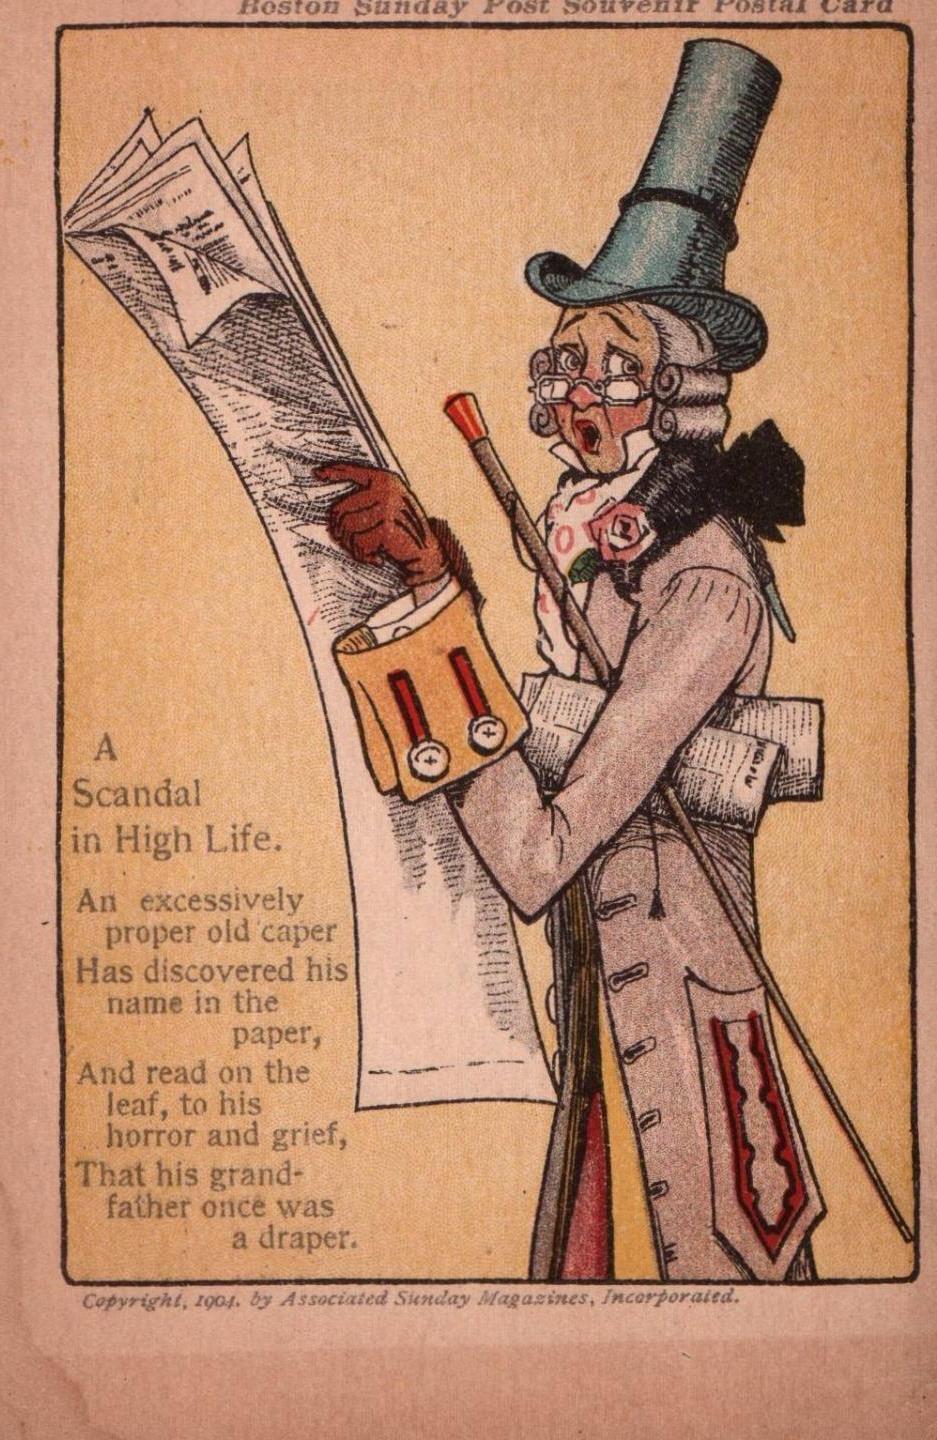 MAN FINDS SCANDAL In NEWSPAPER On Assoc. Sunday Magazines Vintage 1904 Postcard